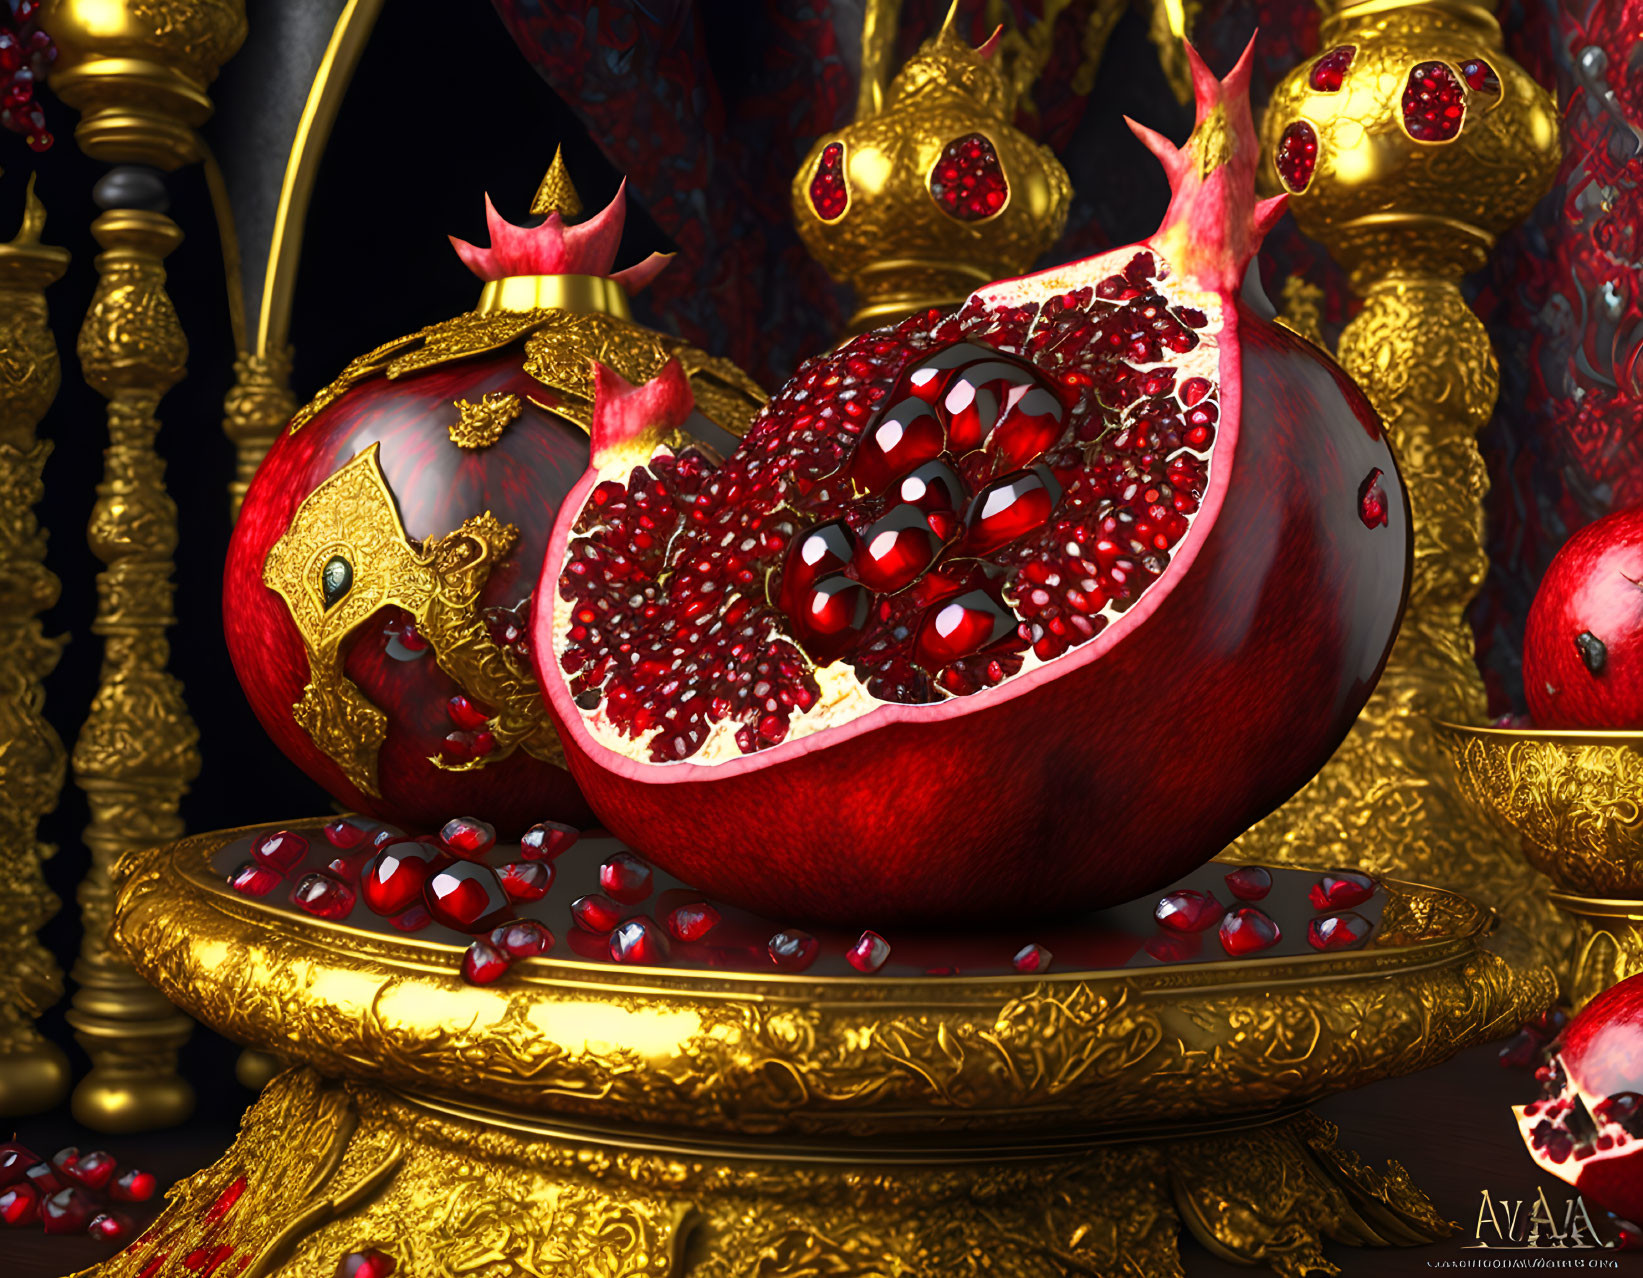 Royal Pomegranate